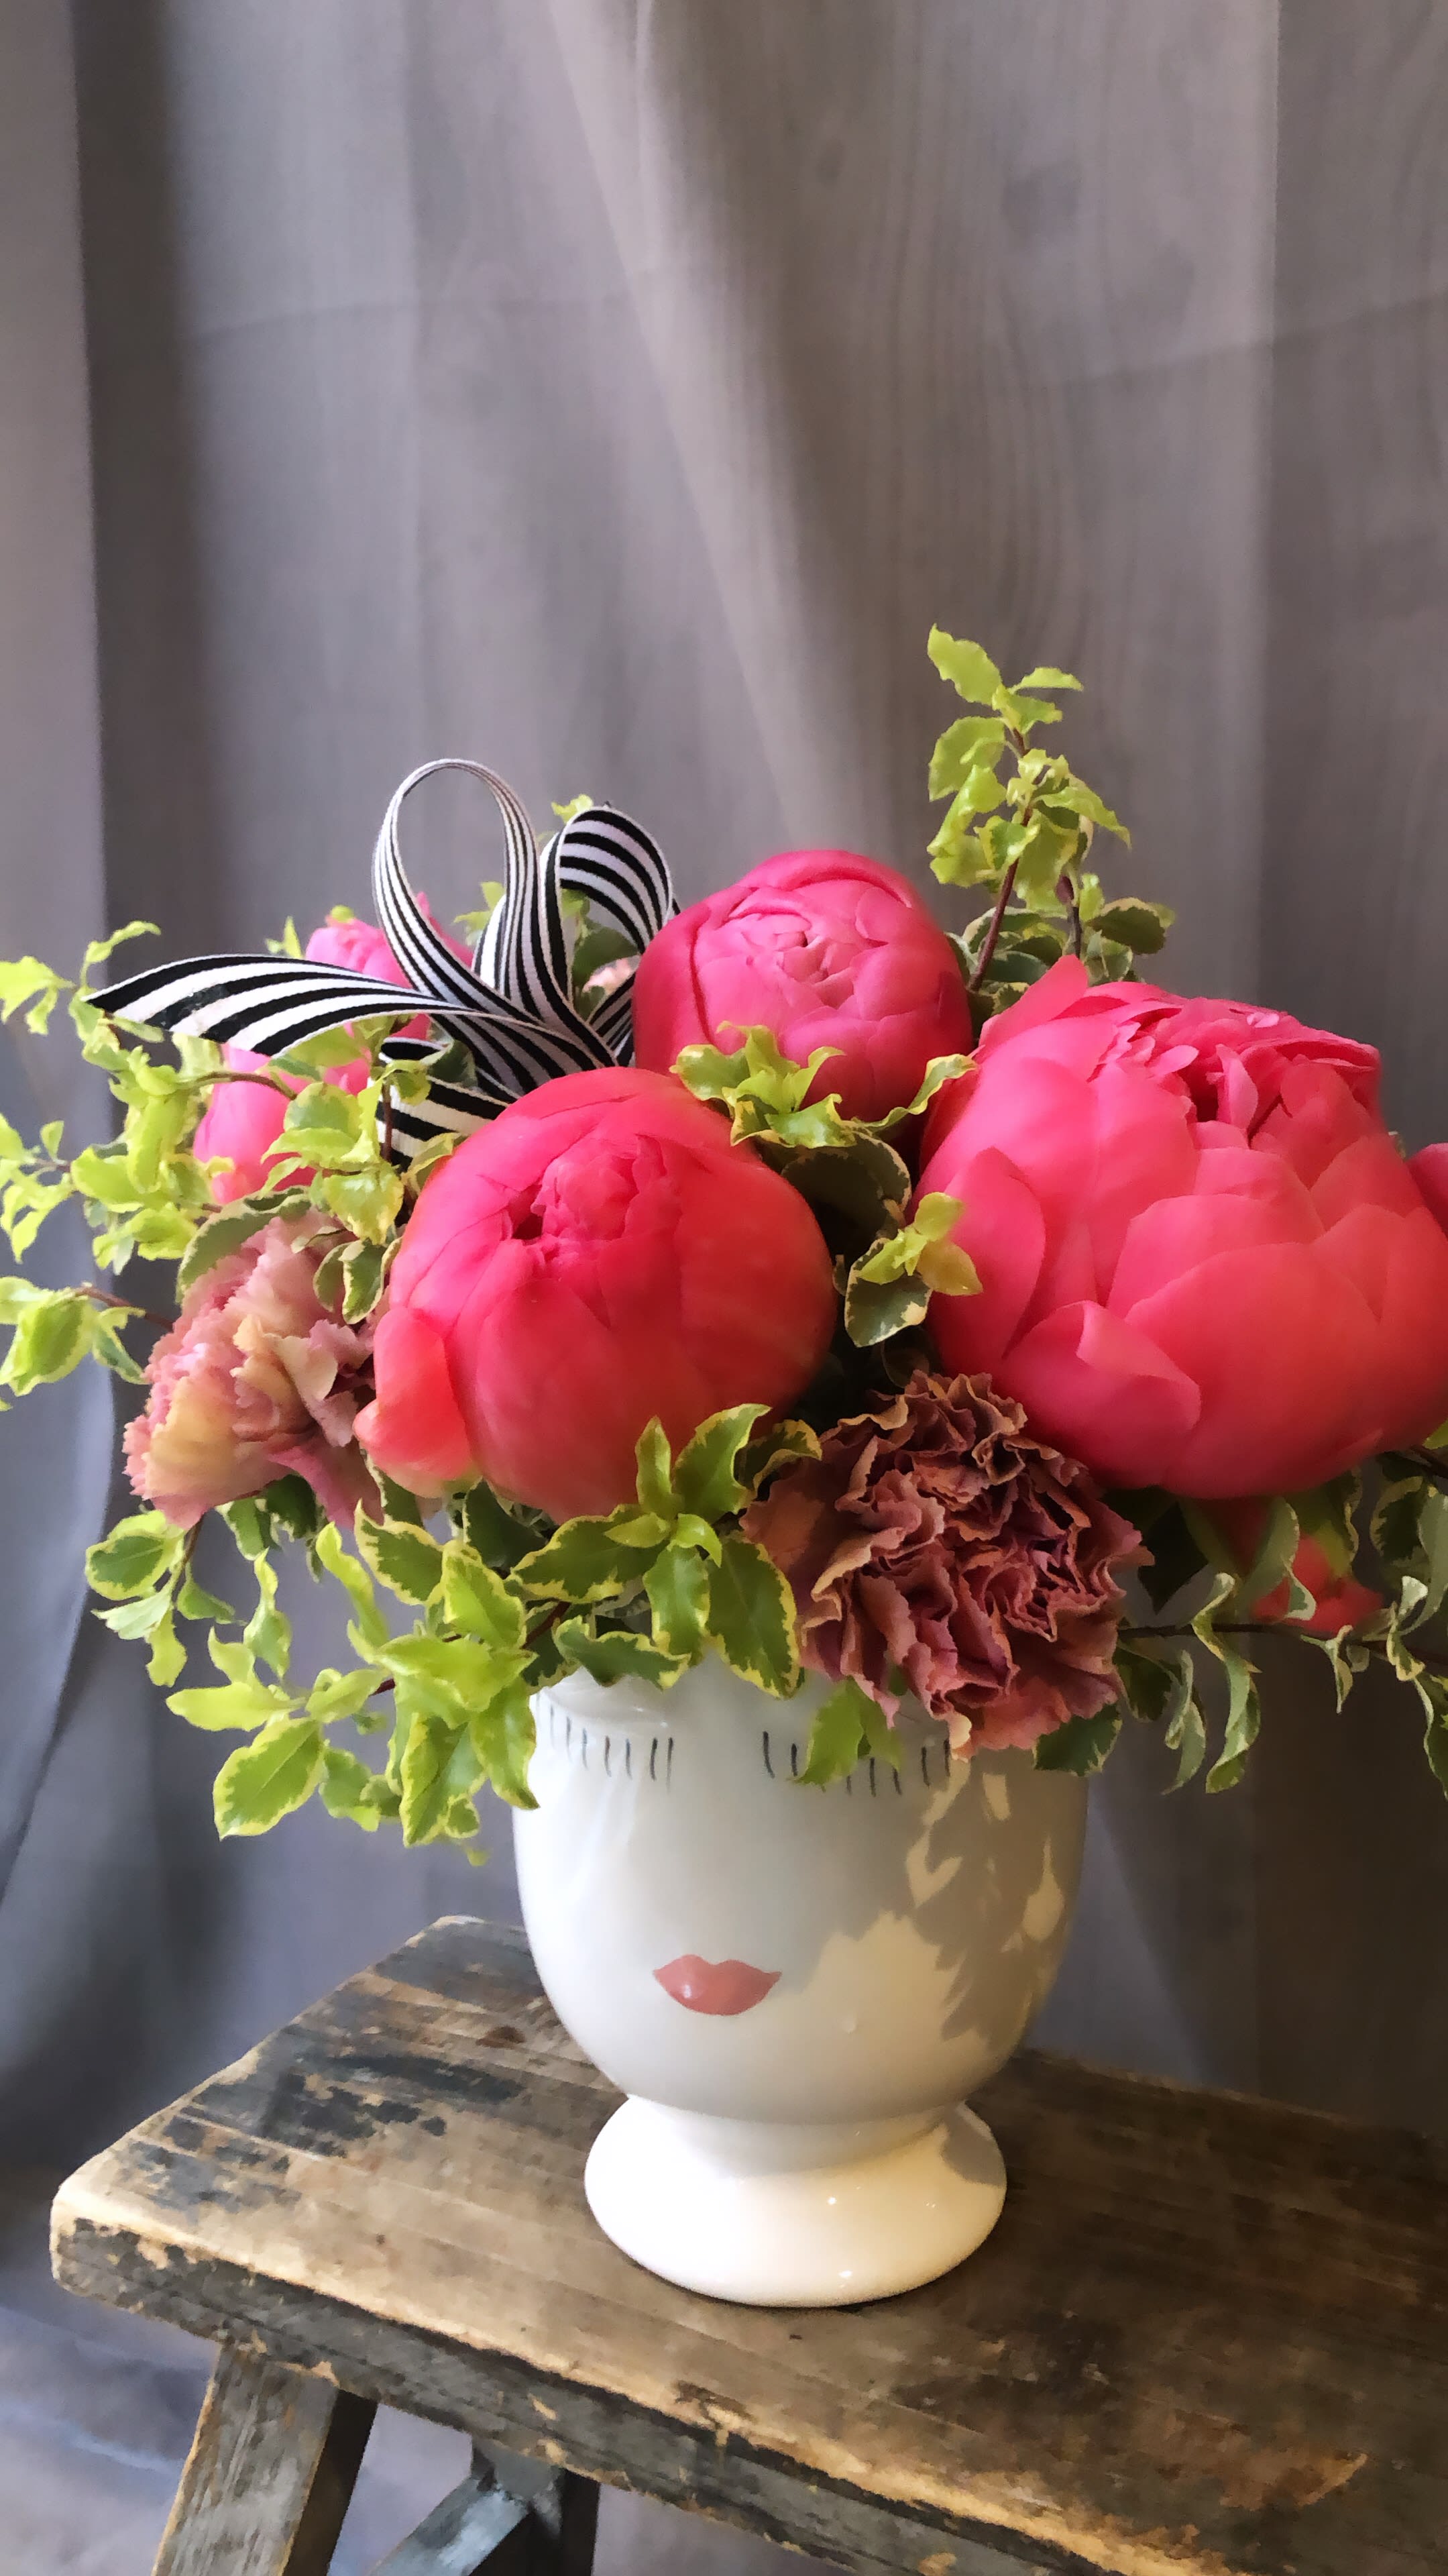 Lois Lane - 3 Beautiful peonies, roses and carnations in our cute #selfie vase.Best flower shop in New York City. #gothamflorist 